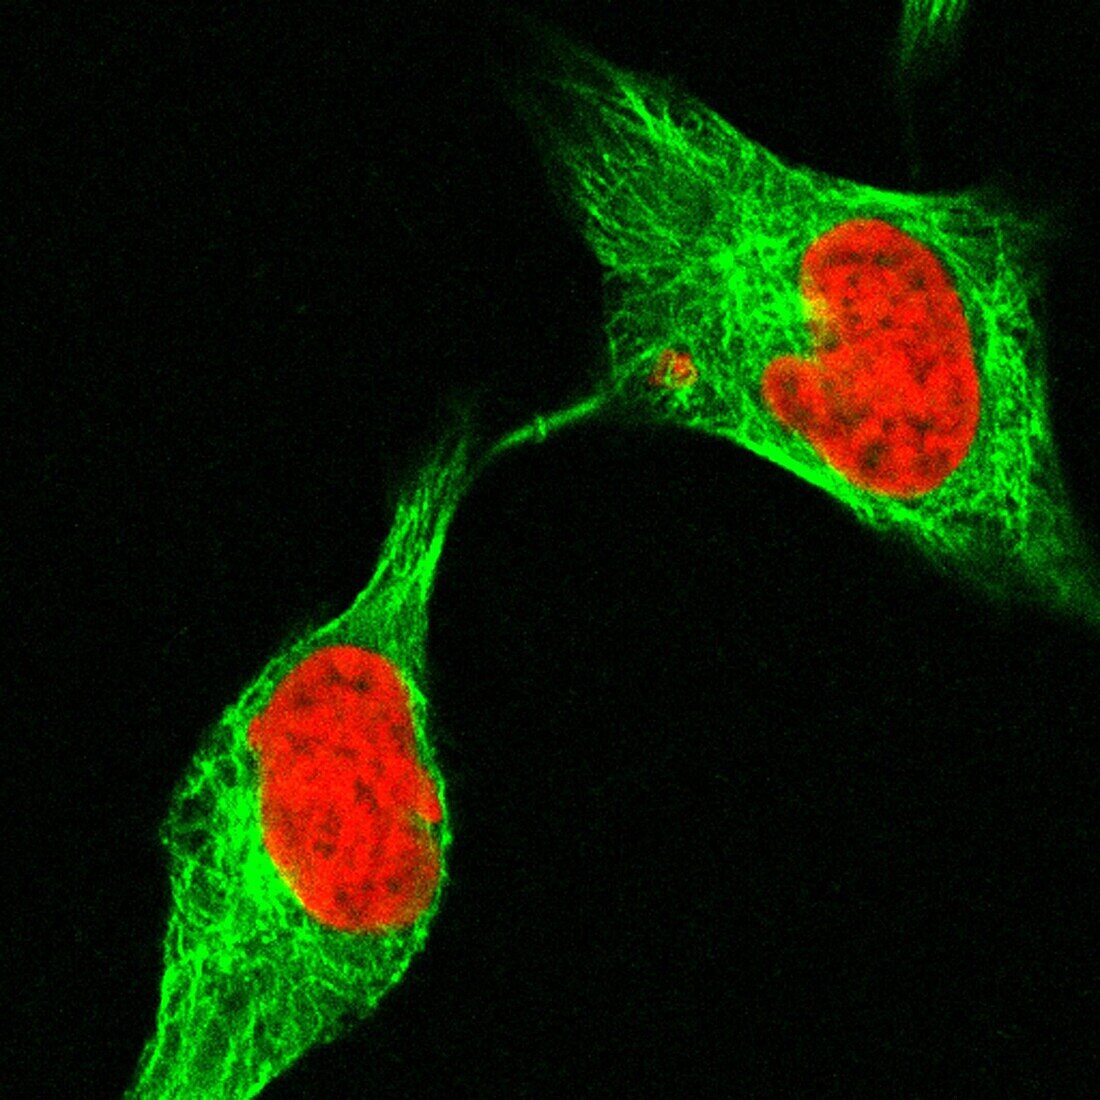 Human cell late in cytokinesis, light micrograph